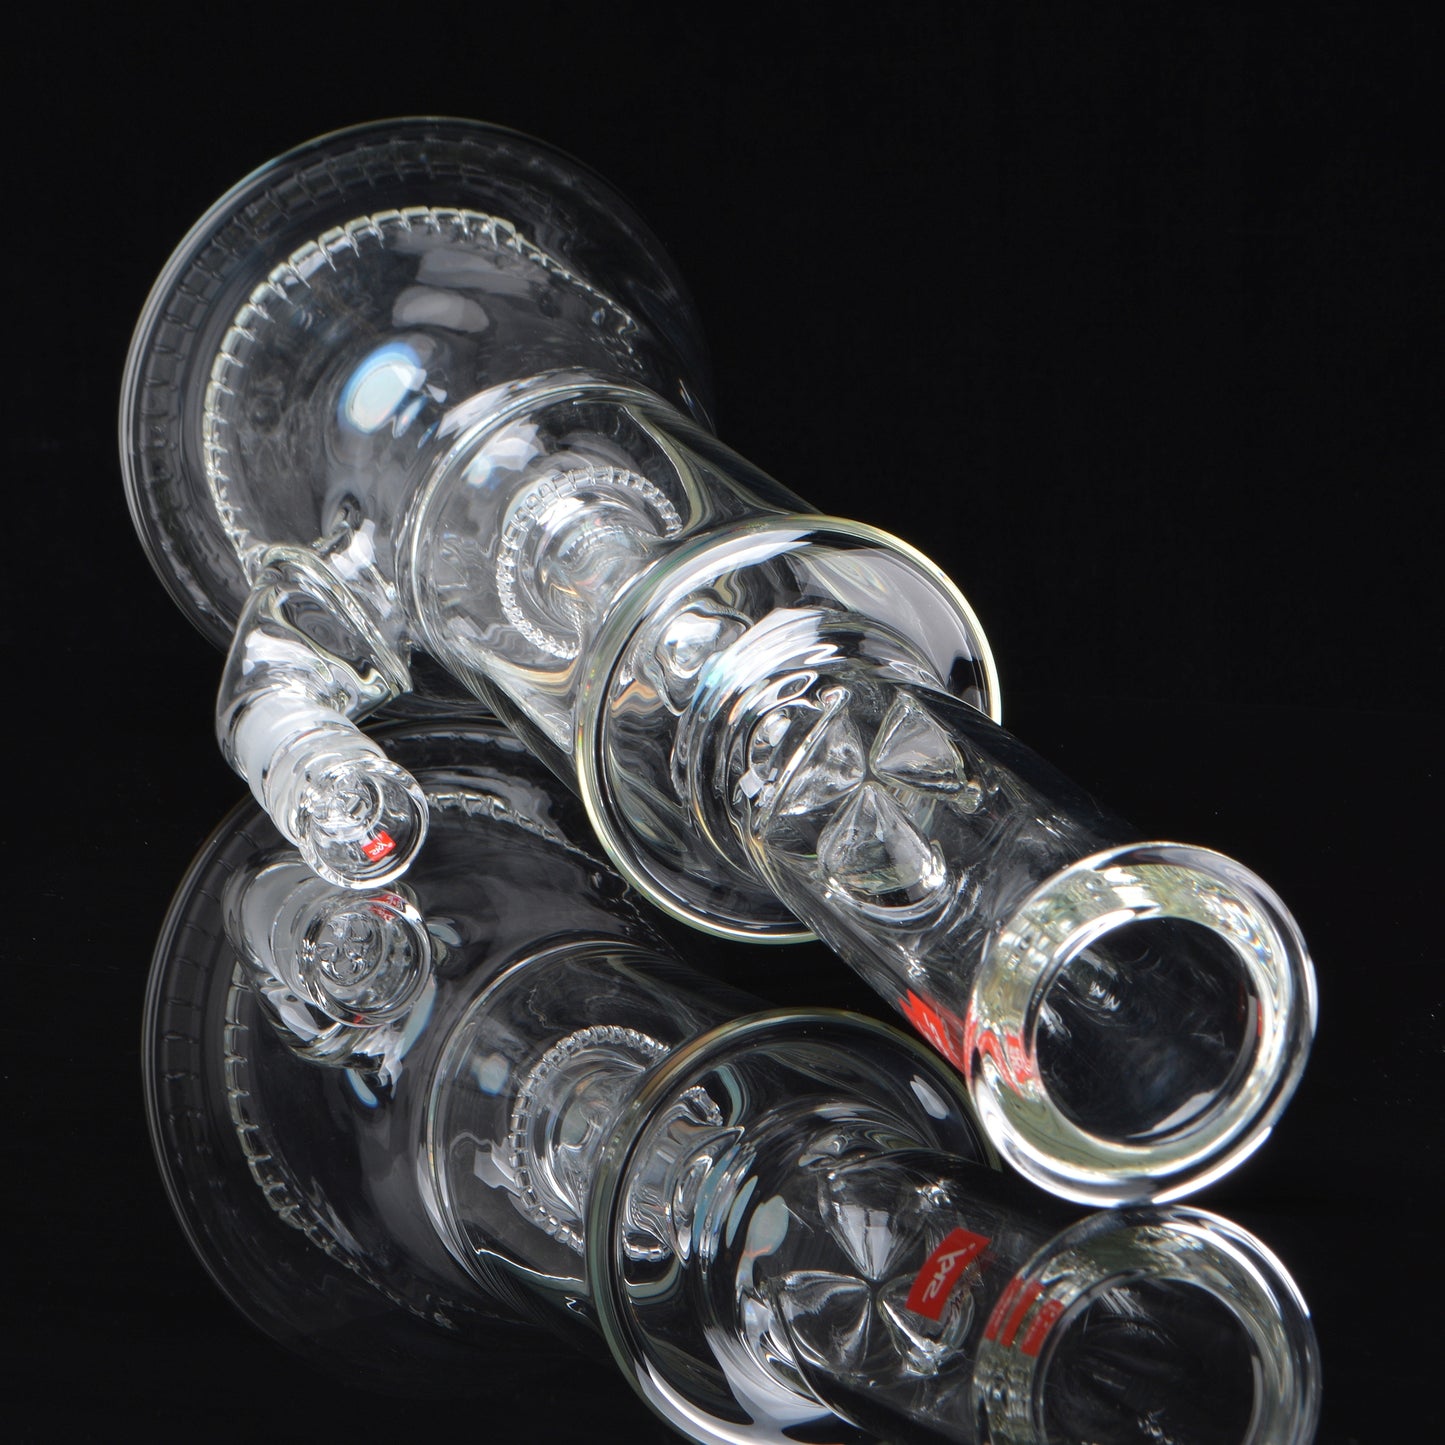 18mm Double Fusion Beaker, mouhtpiece show, laying down